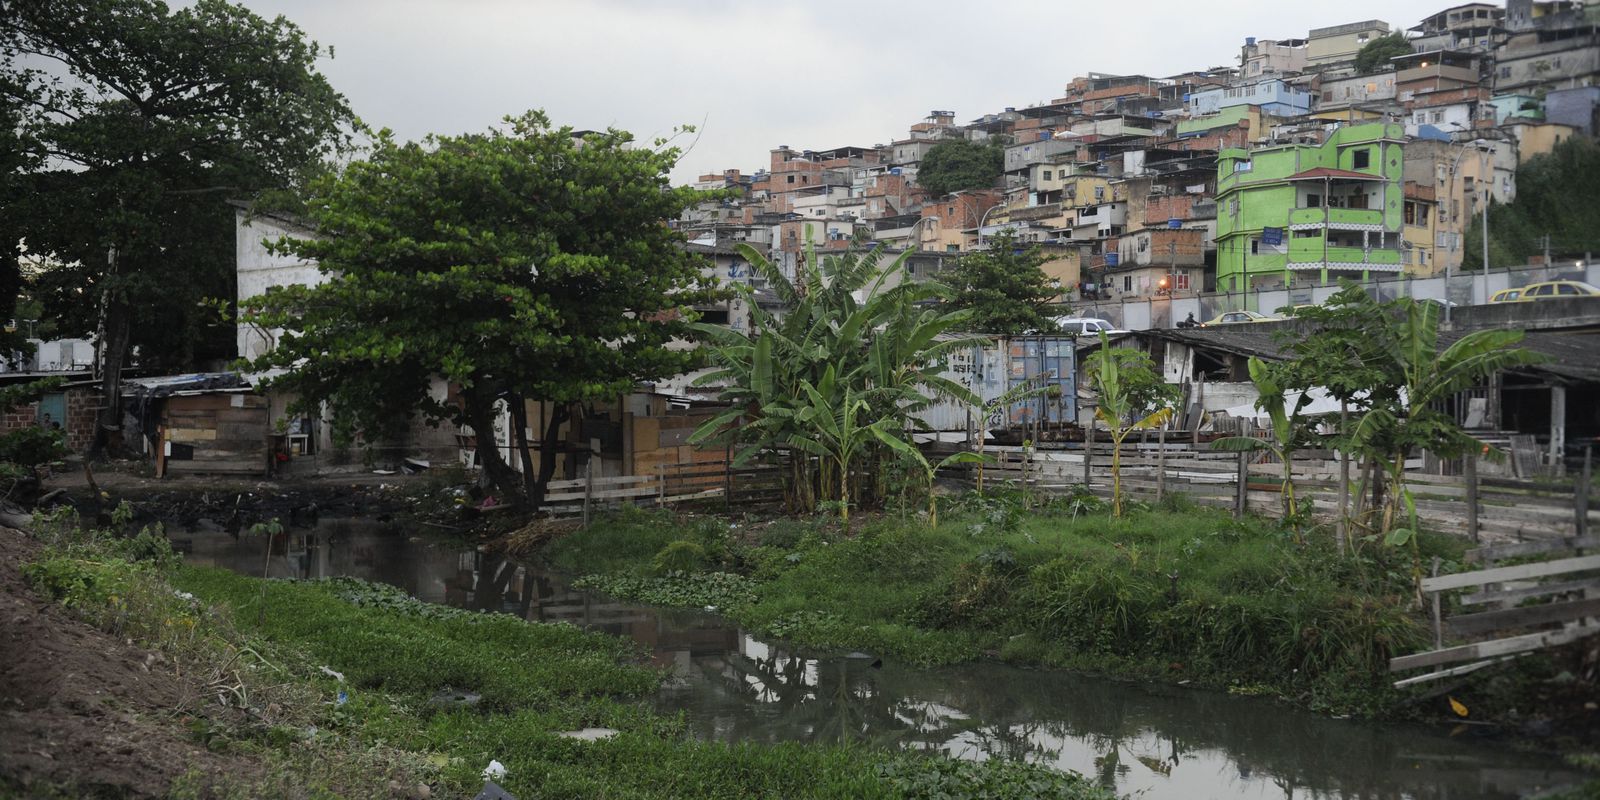 Criticisms of visits to favelas reveal prejudice, say experts